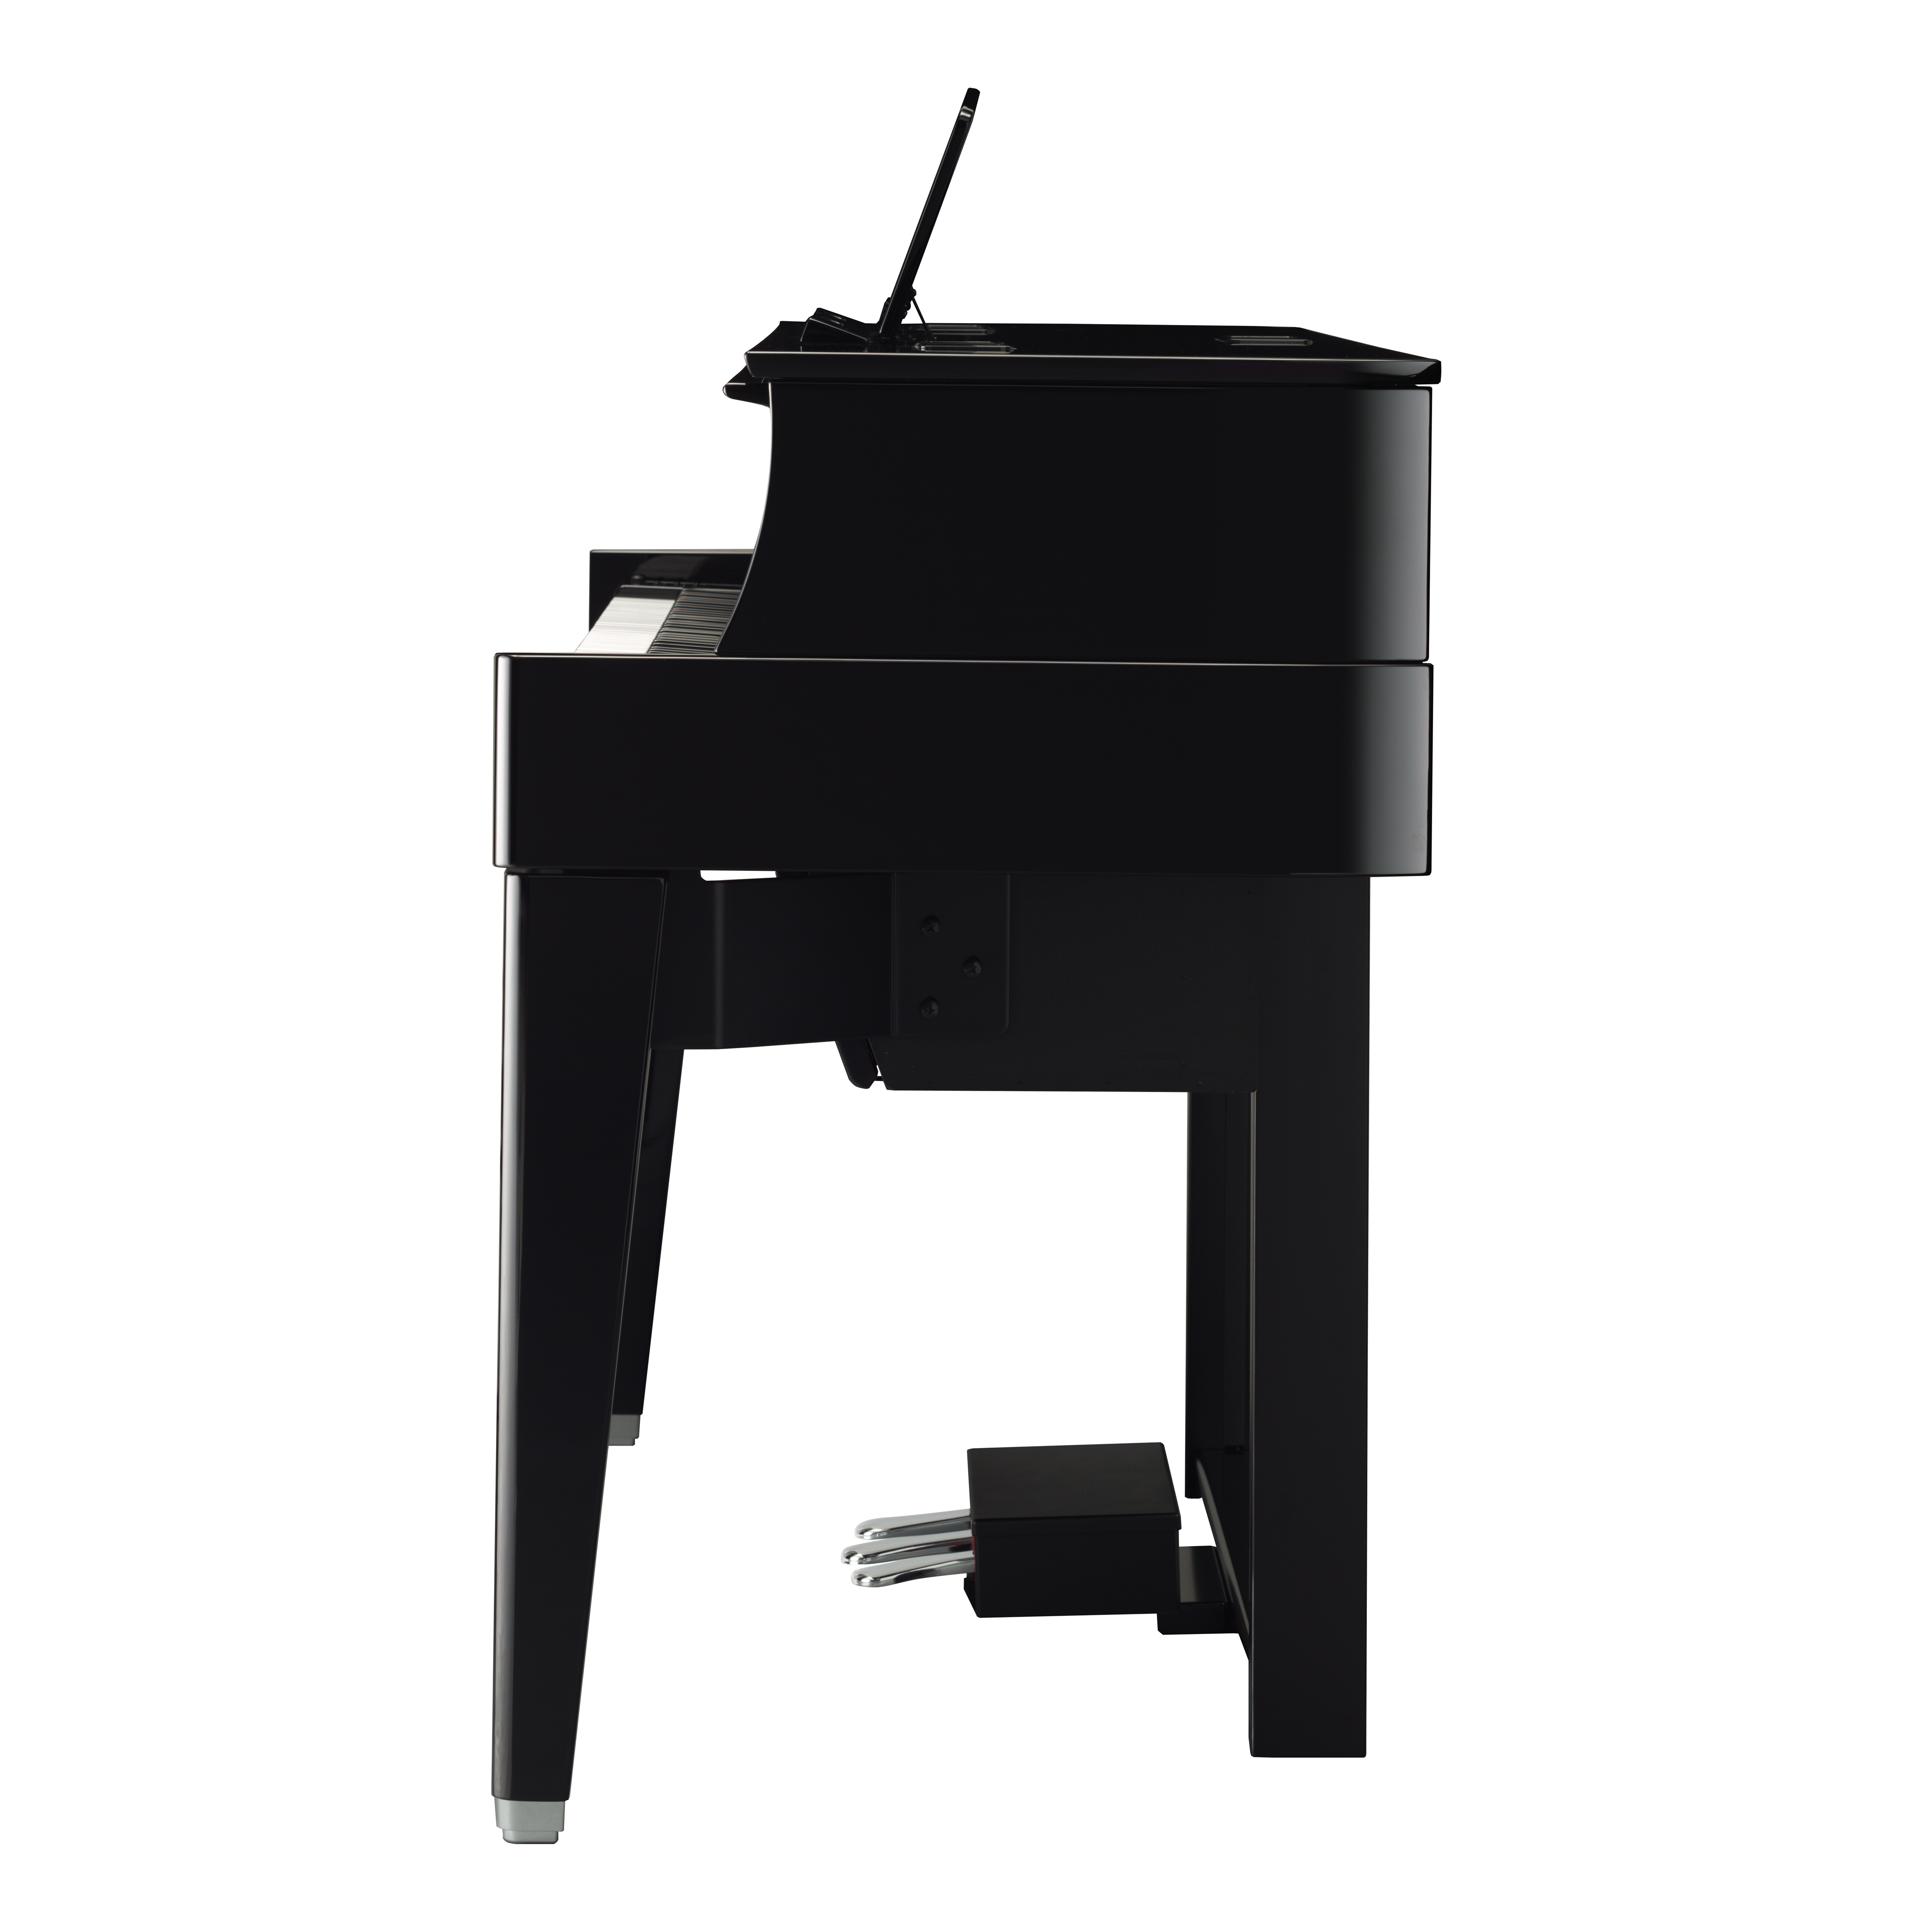 Yamaha AvantGrand N1X 數碼鋼琴